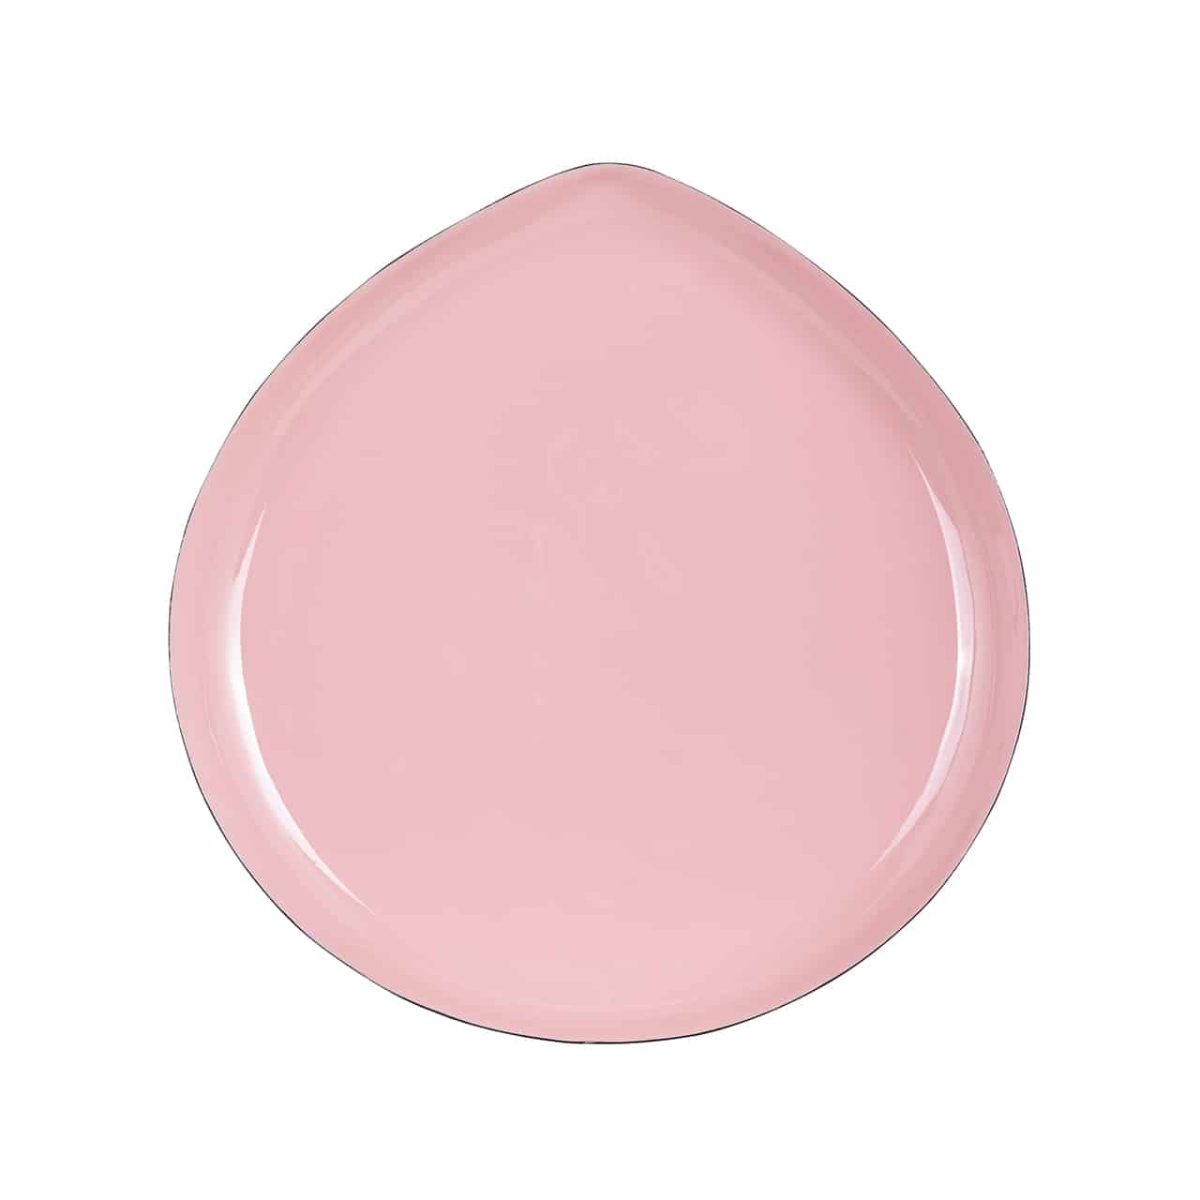 825100 - Bijzettafel Trinity roze/grijs set van 3 (Pink)